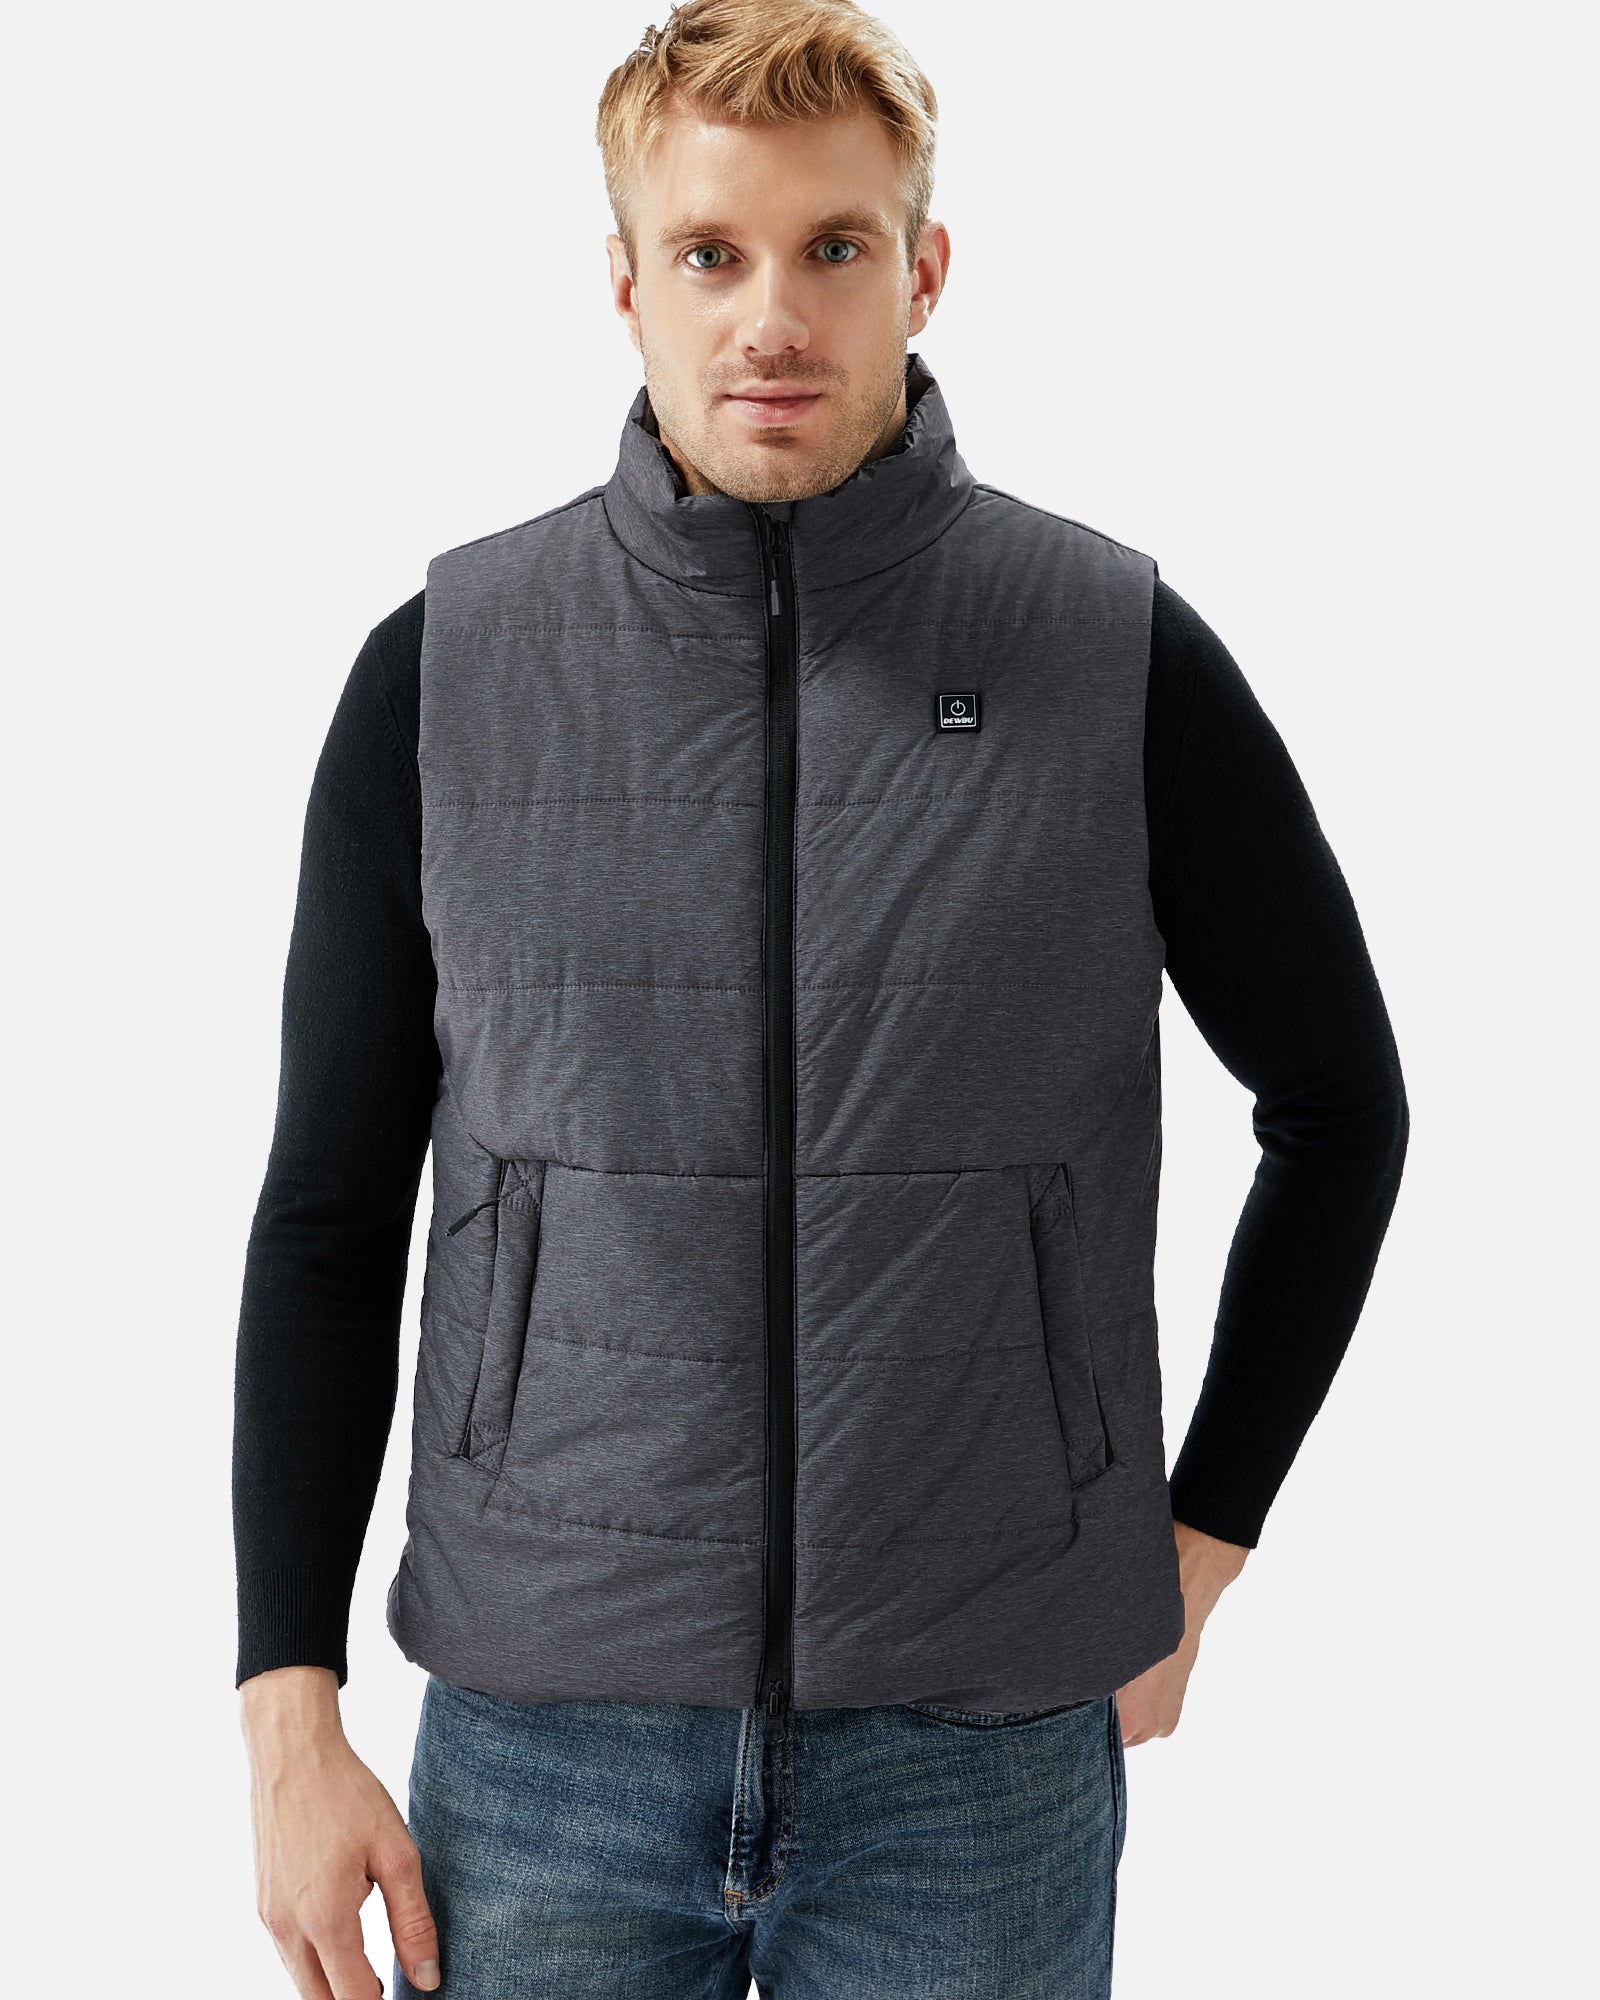 DEWBU® Men's Heated Jacket With 12V Battery Pack - Grey